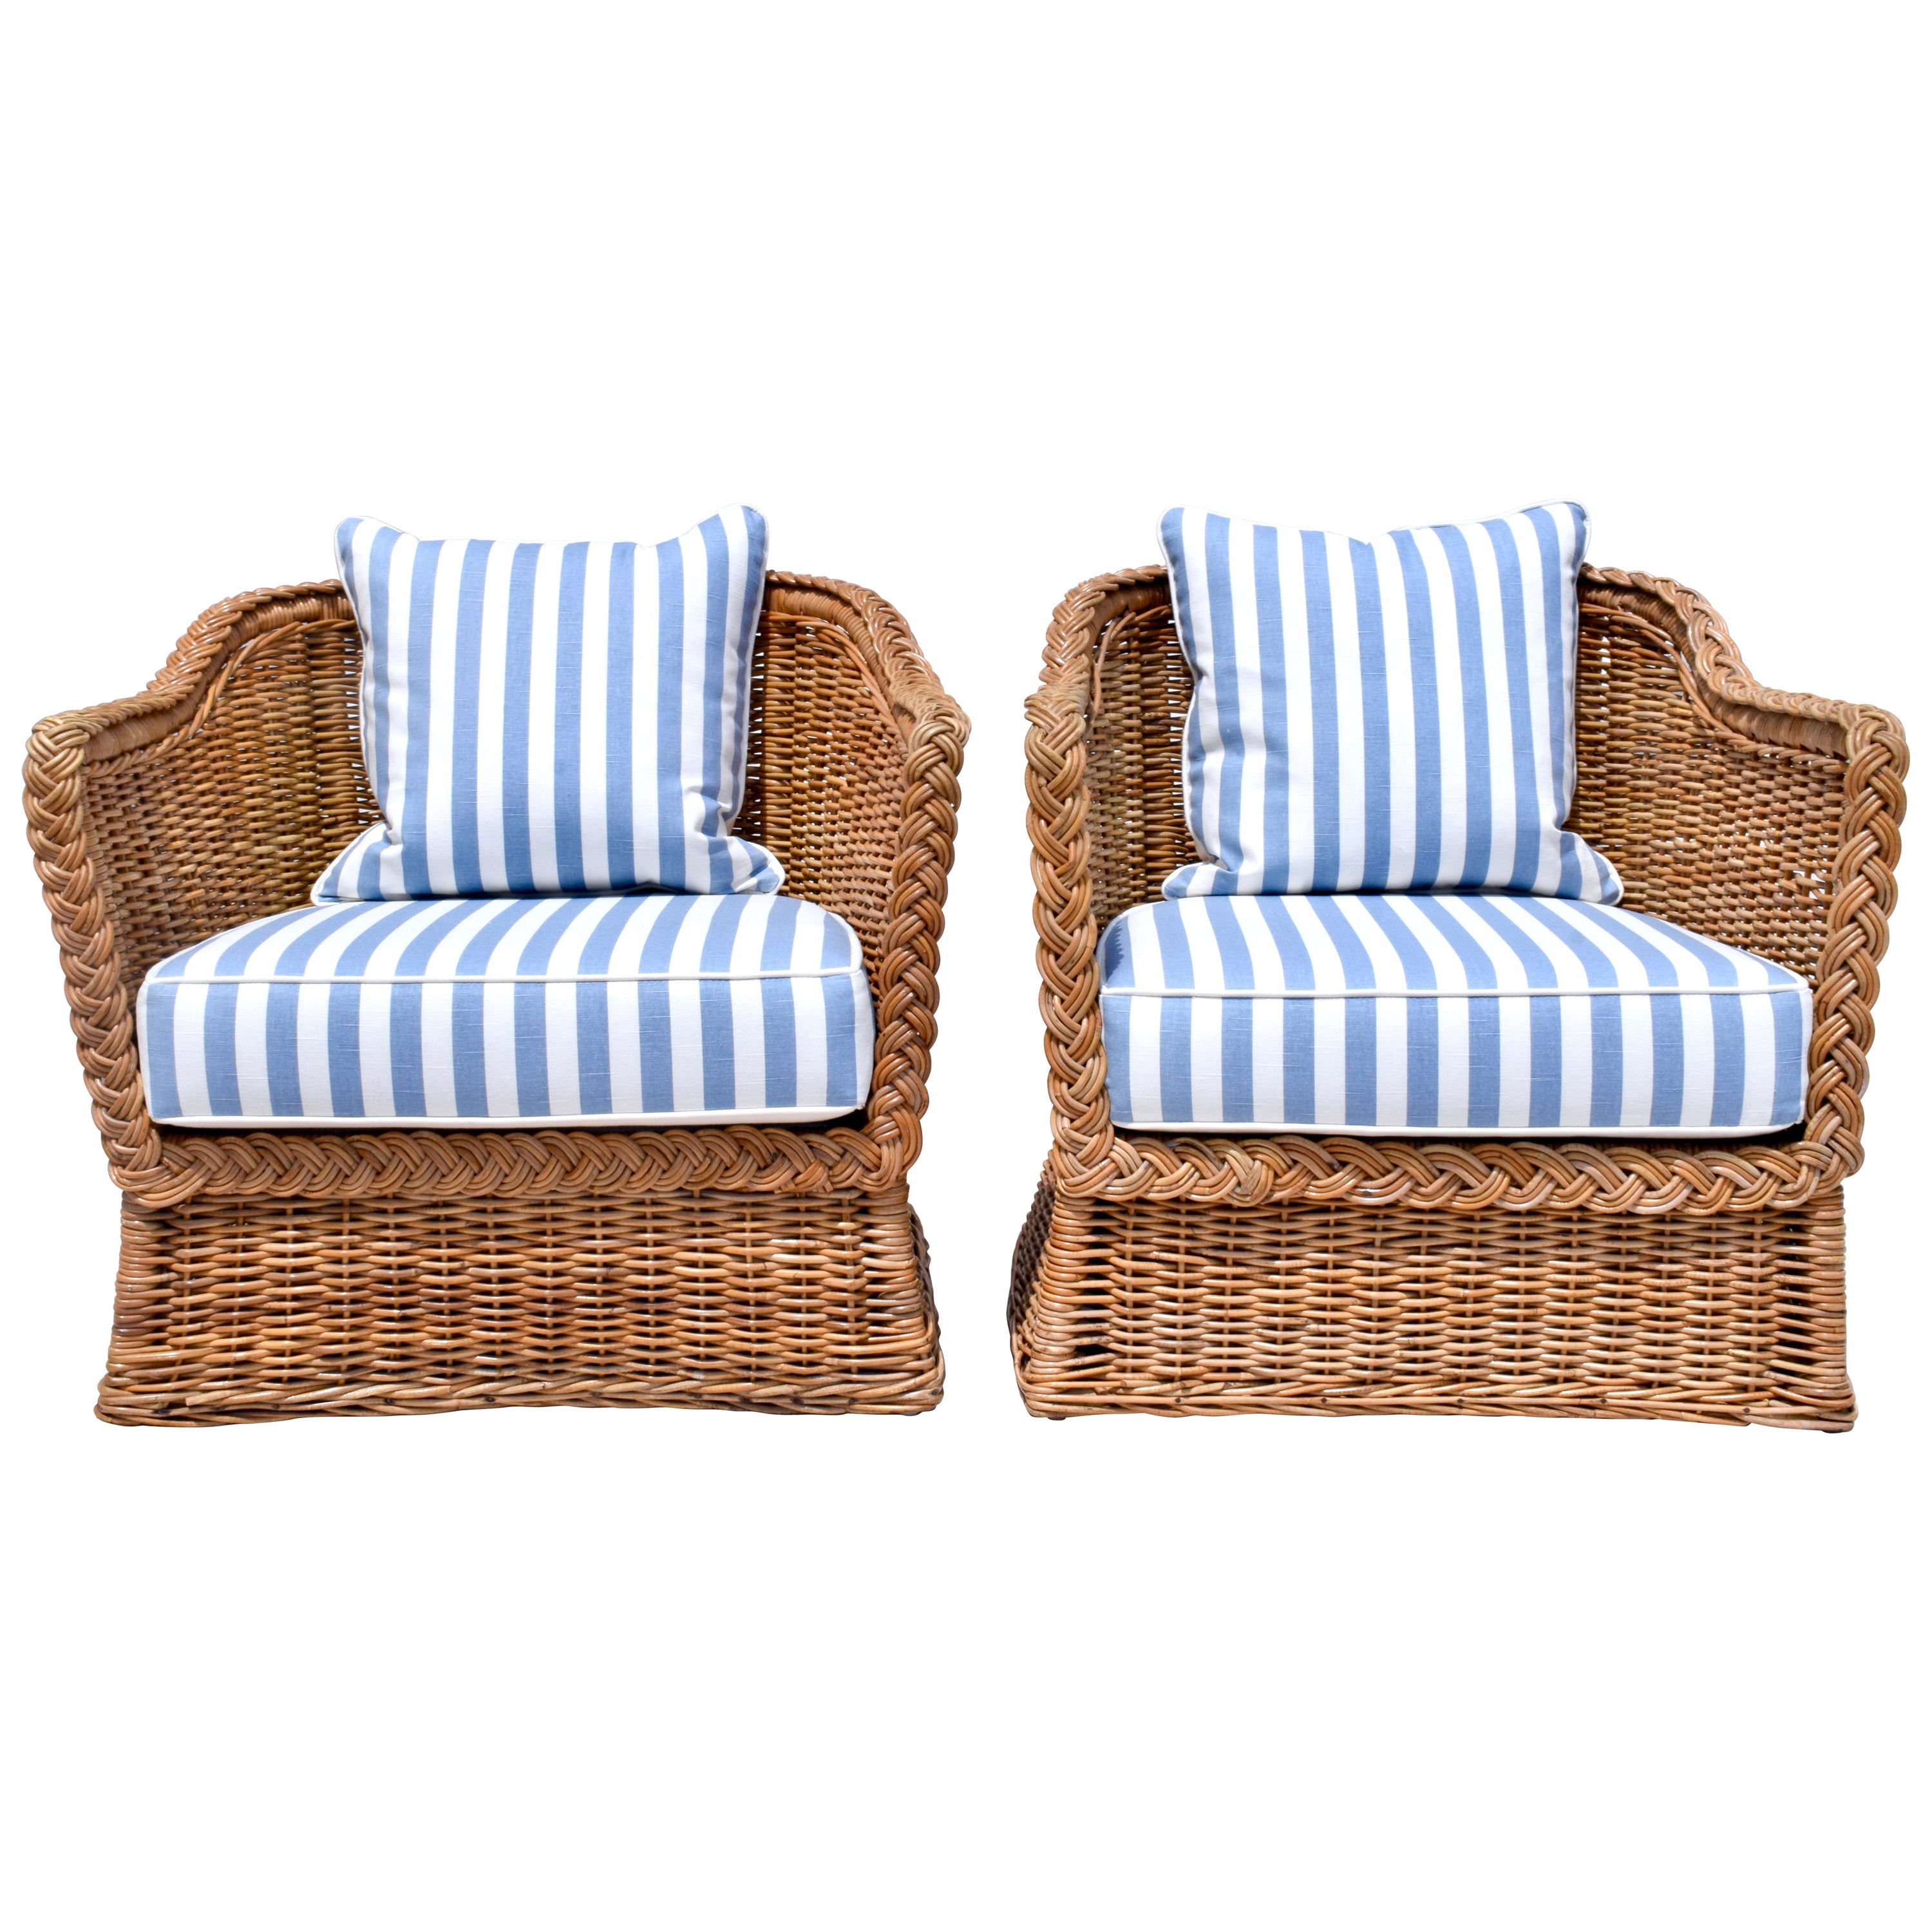 Wicker Works Braided Wicker Rattan Arm Chairs in Blue & White Linen